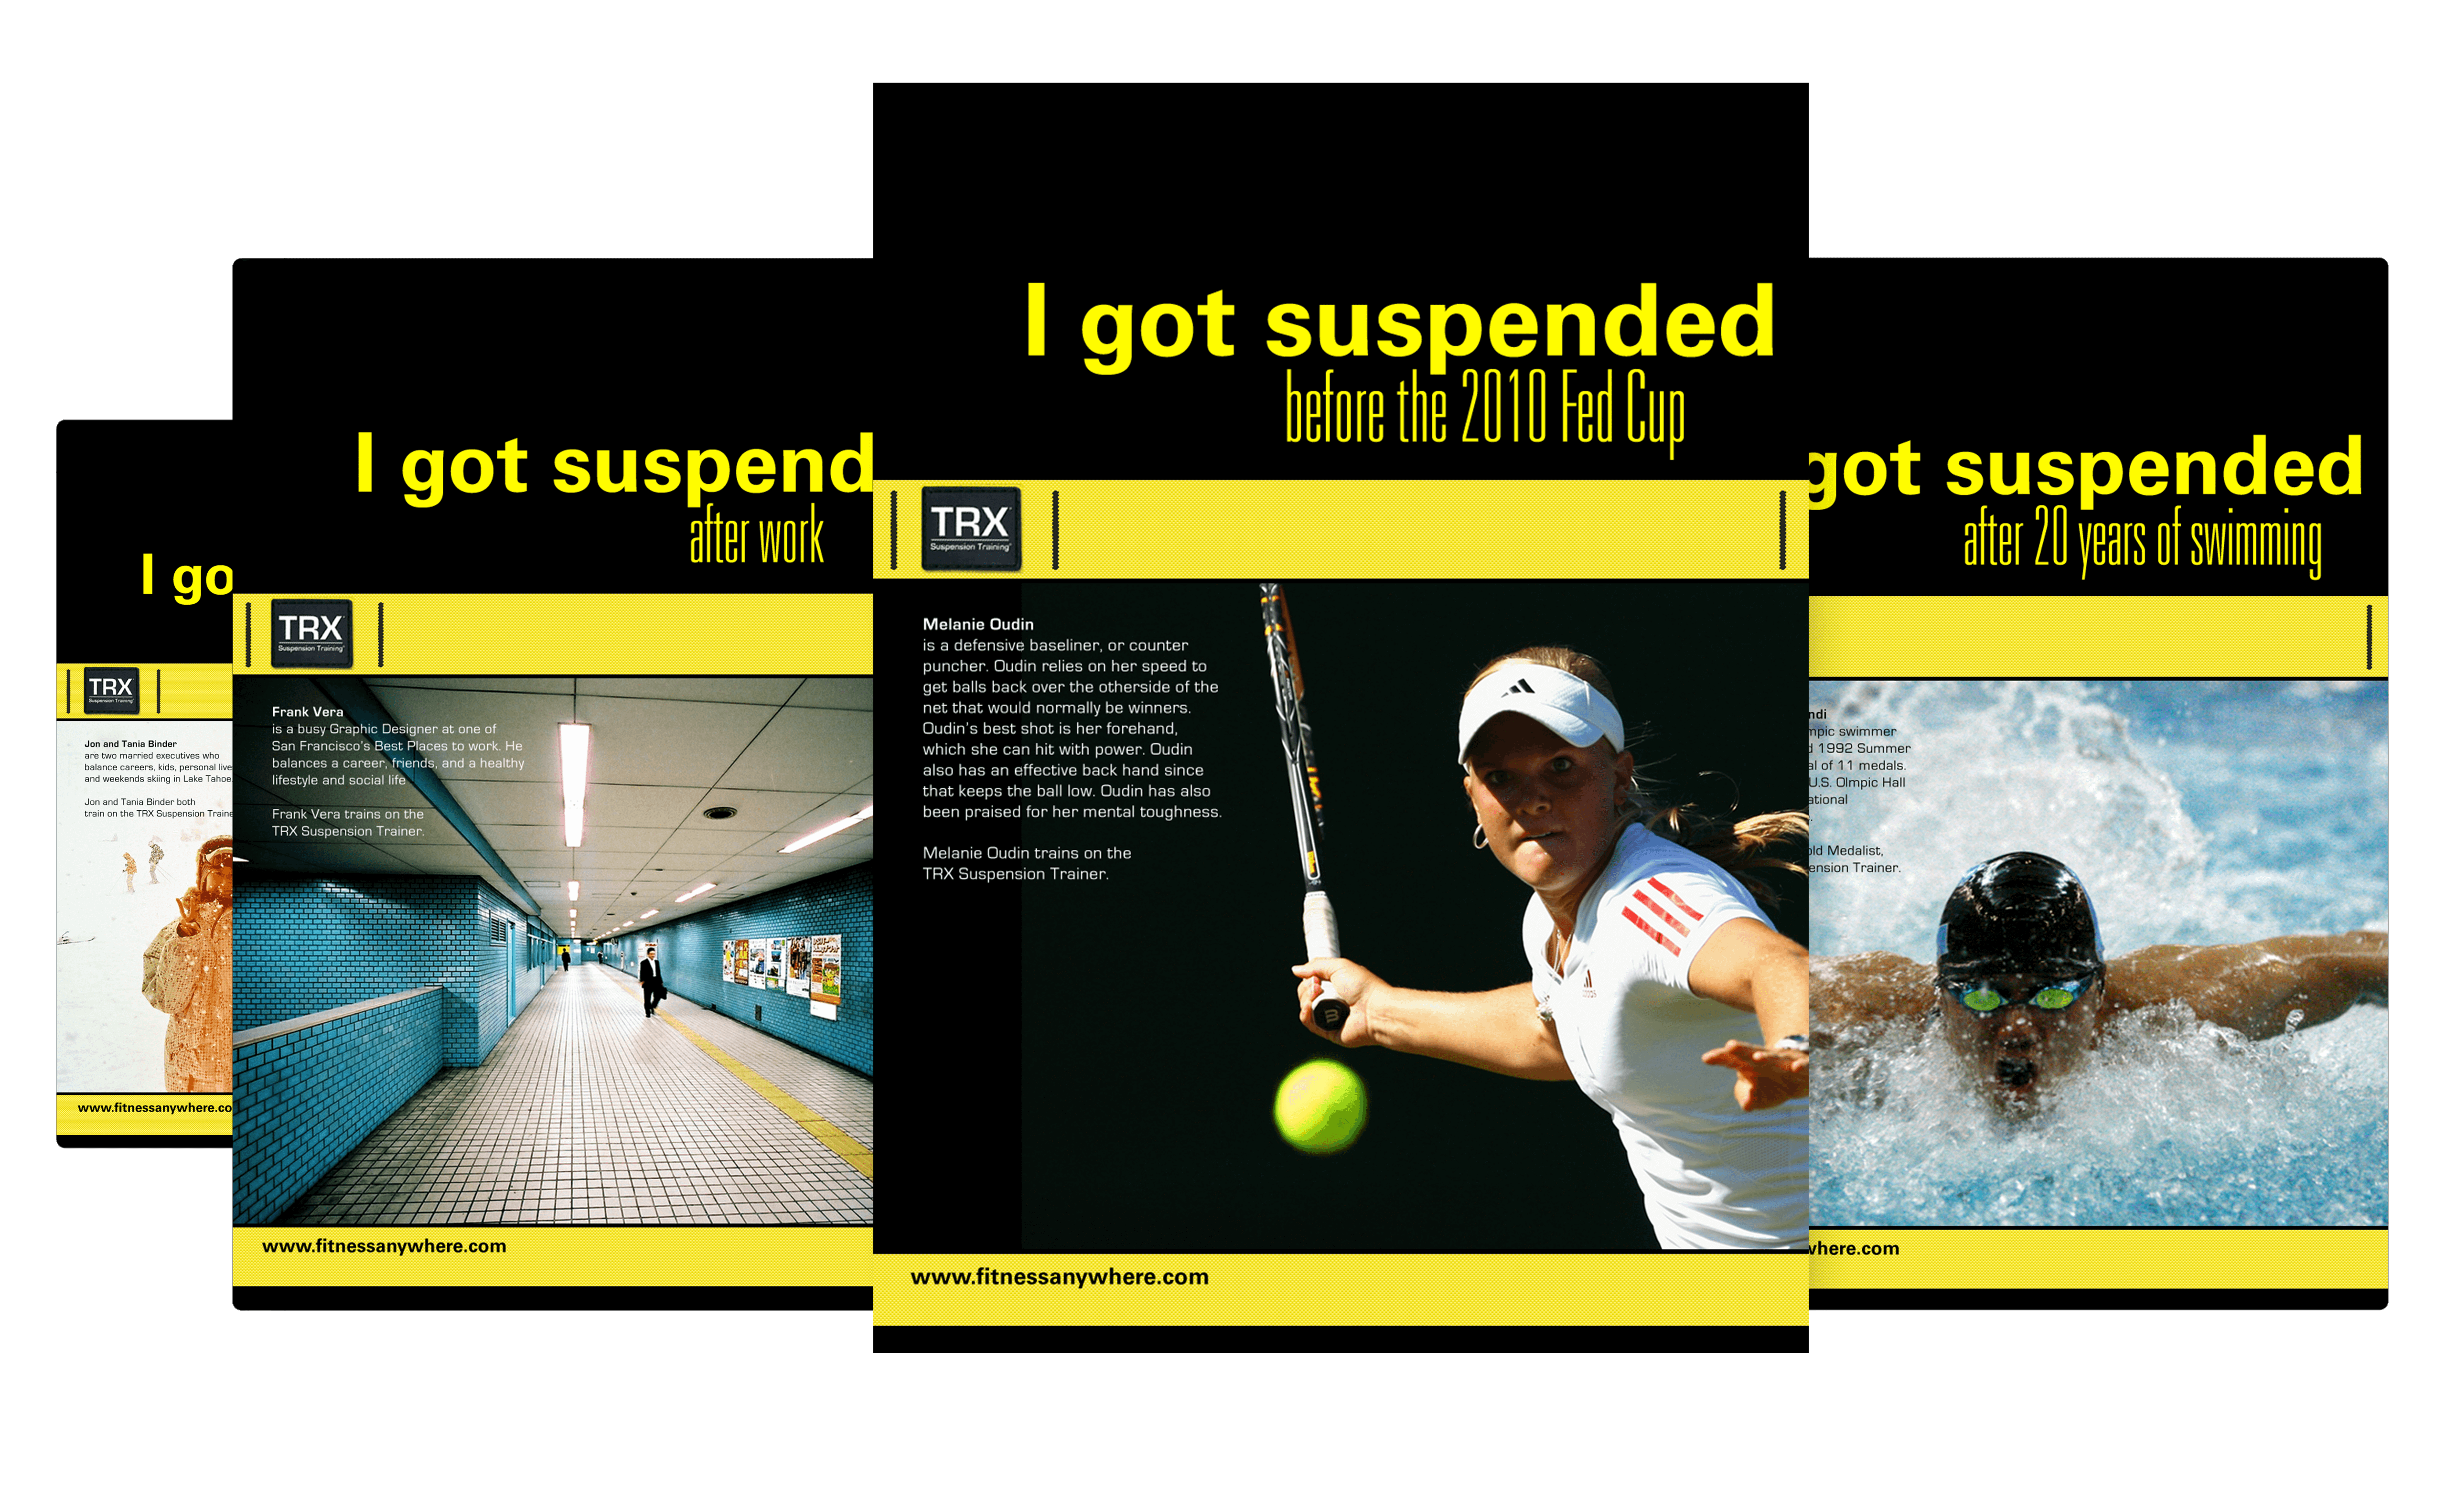 I got suspended campaign